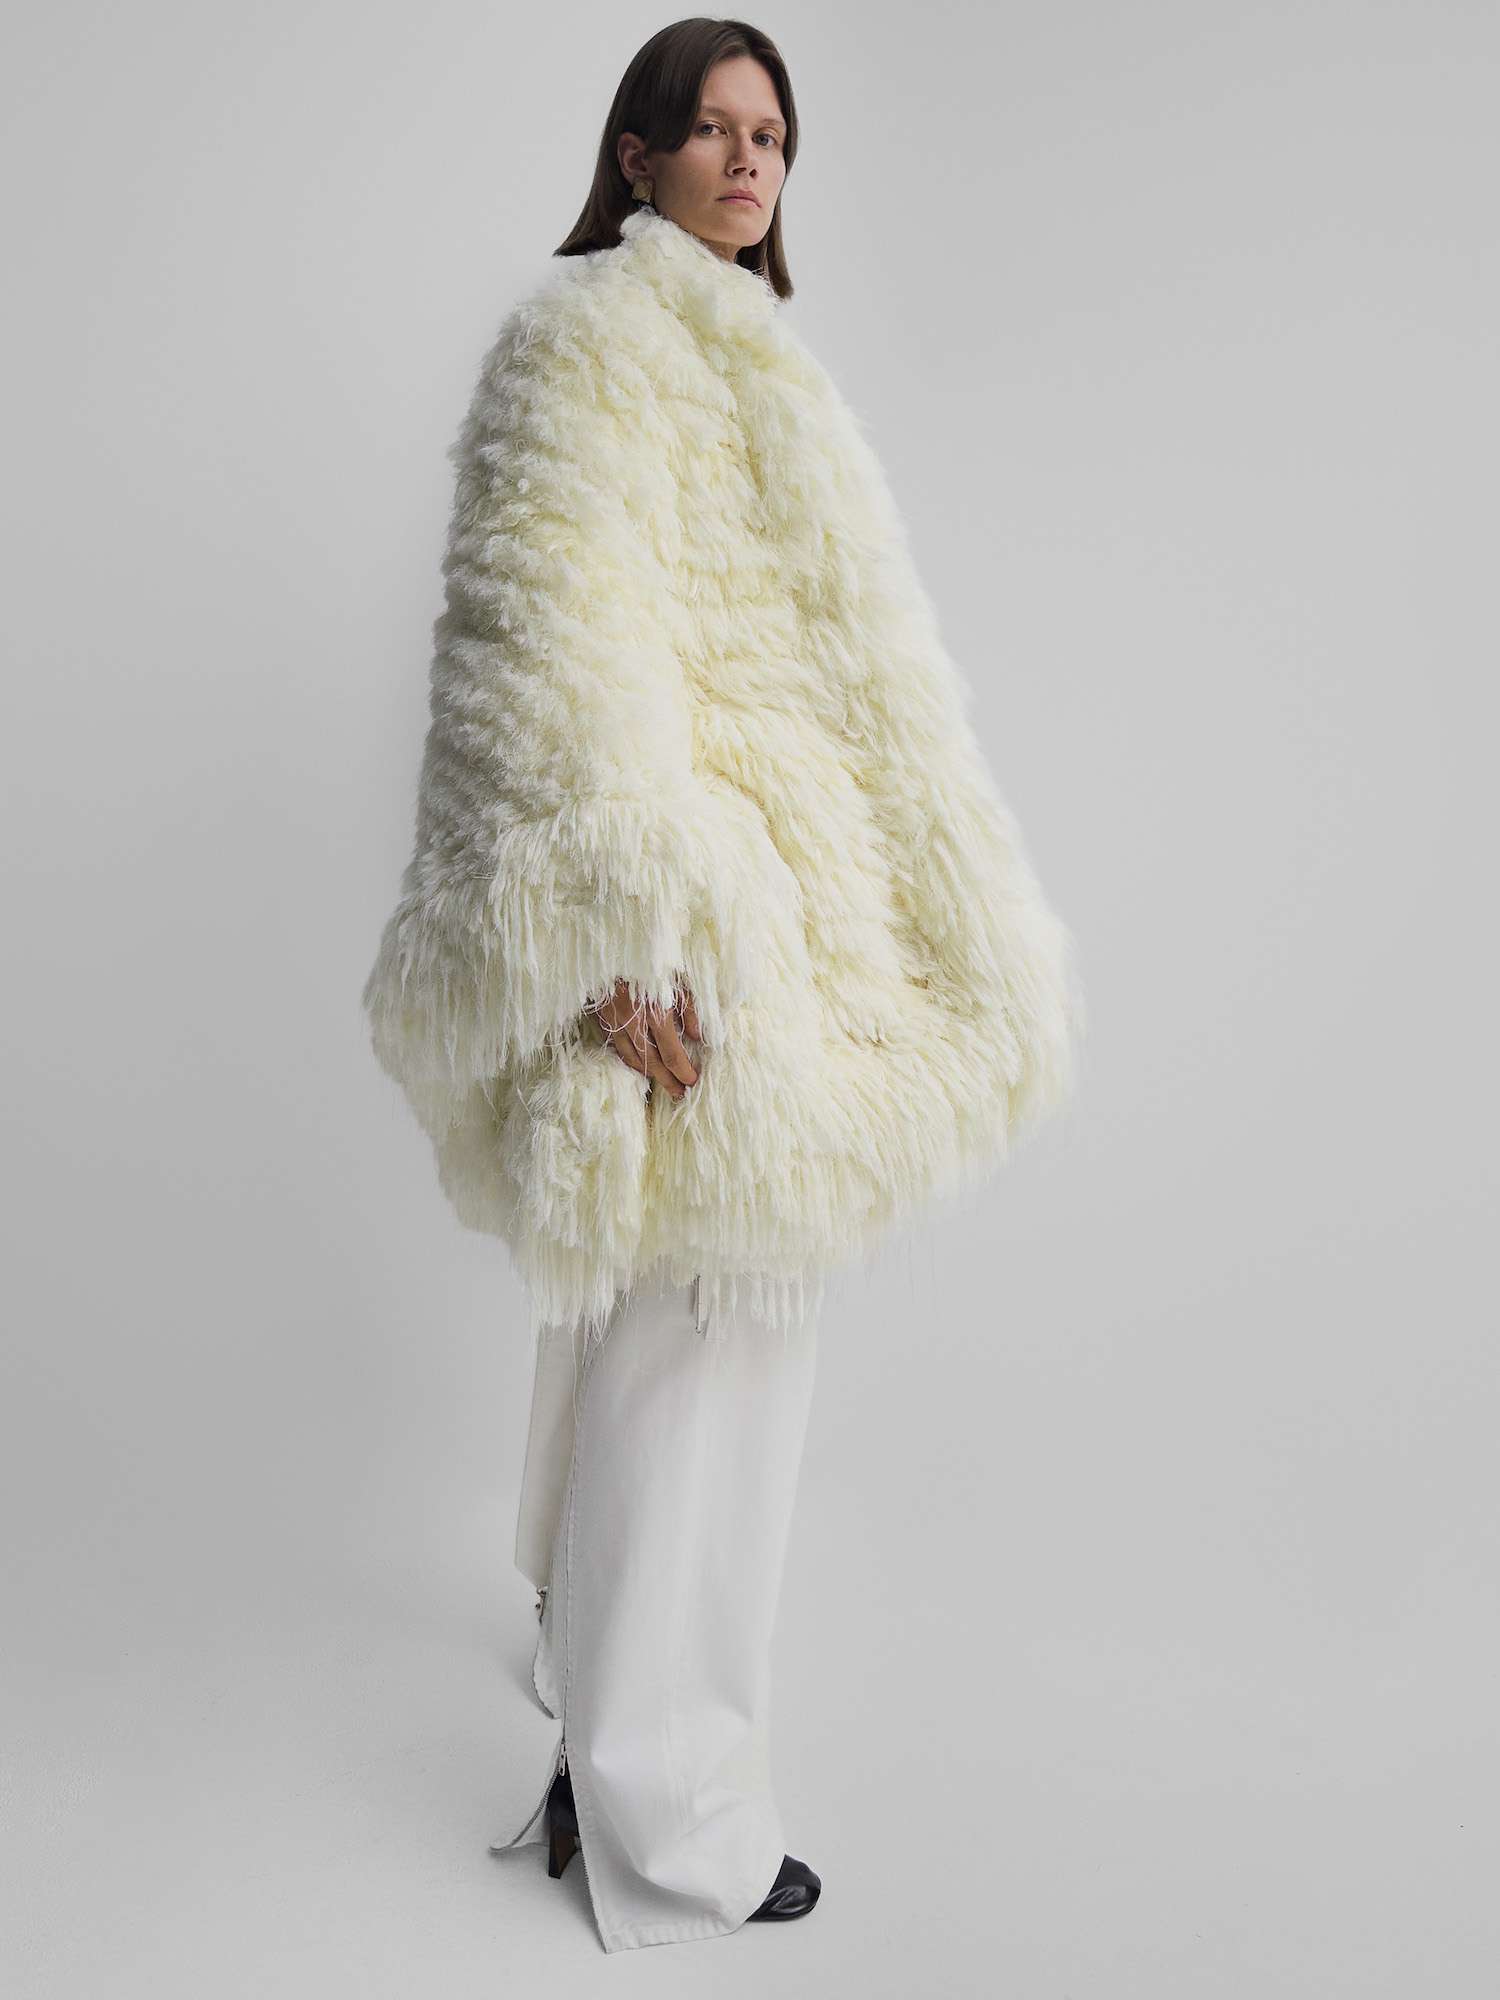 No modelo do casaco Phoebe Philo, feito de viscose creme com bordado manual